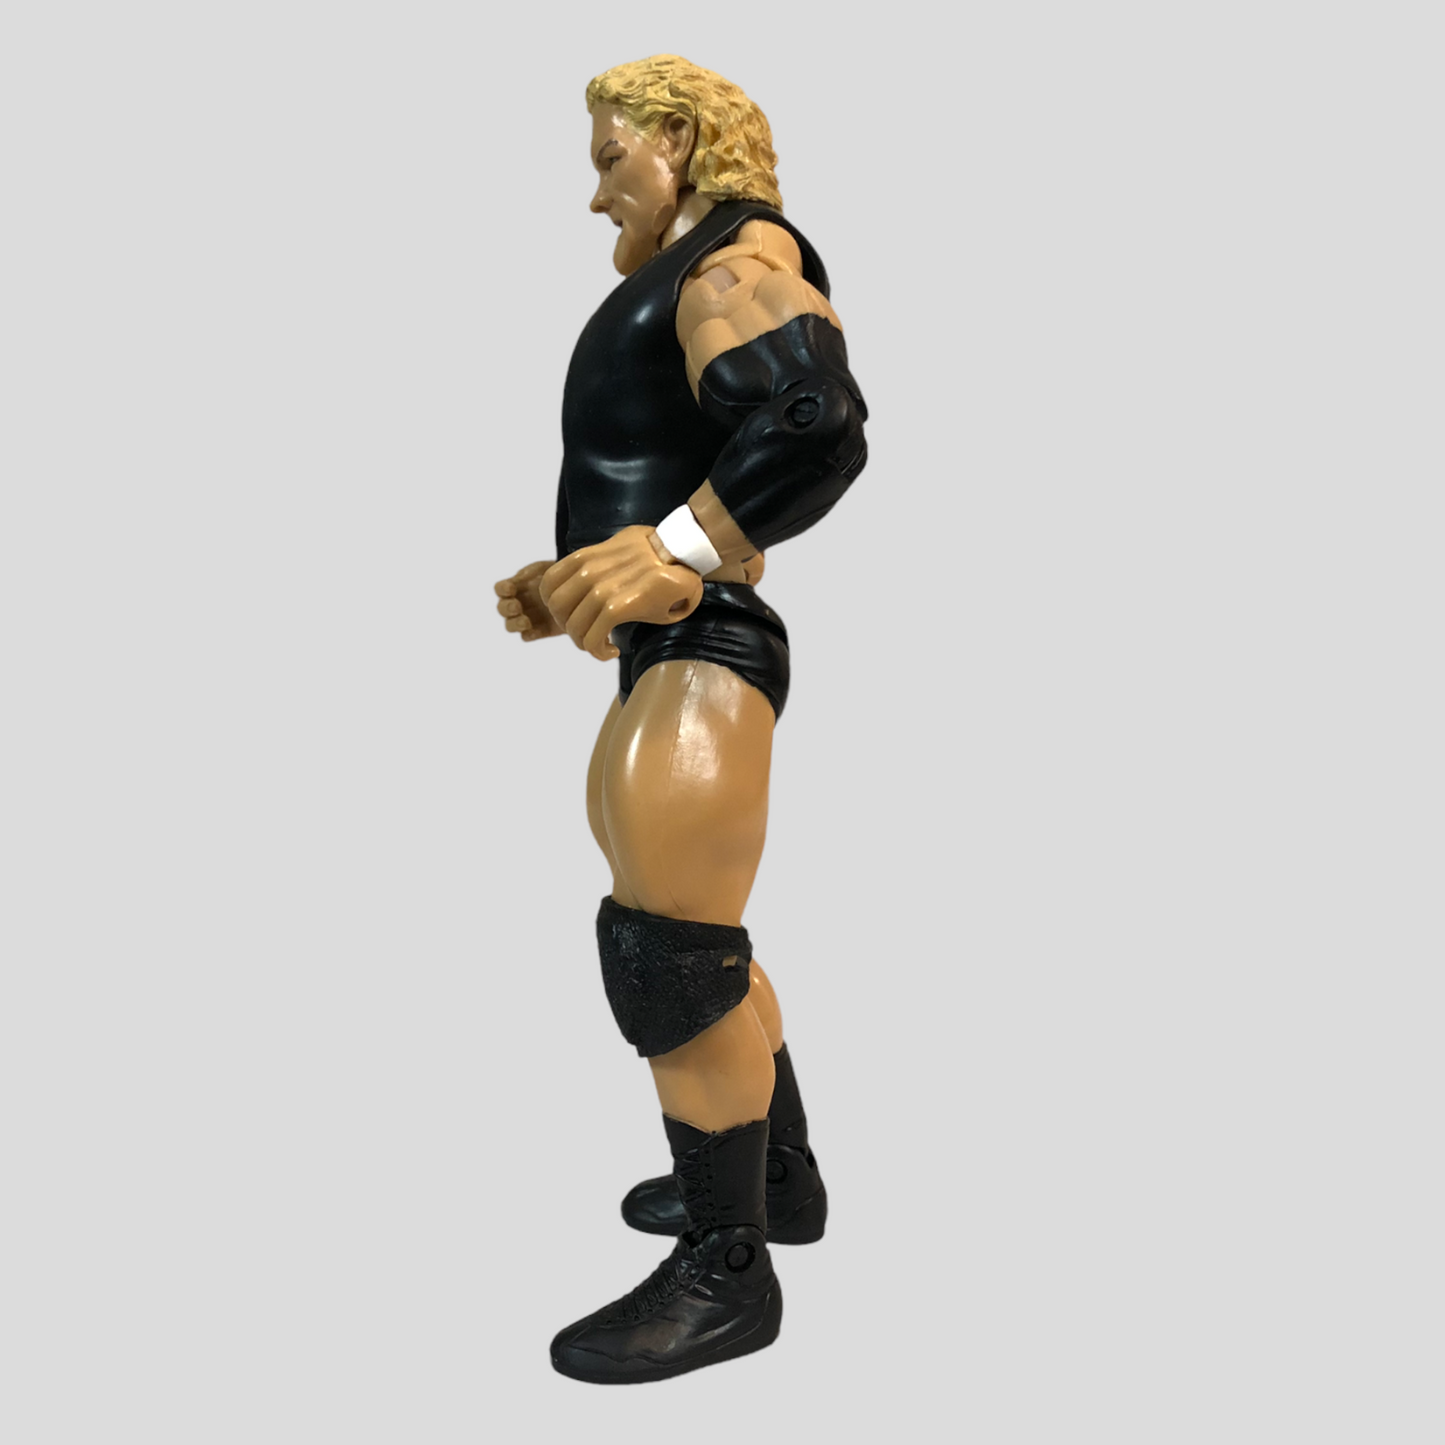 2007 WWE Jakks Pacific Classic Superstars Series 16 Sycho Sid [With Kneepads, Belt by Feet]